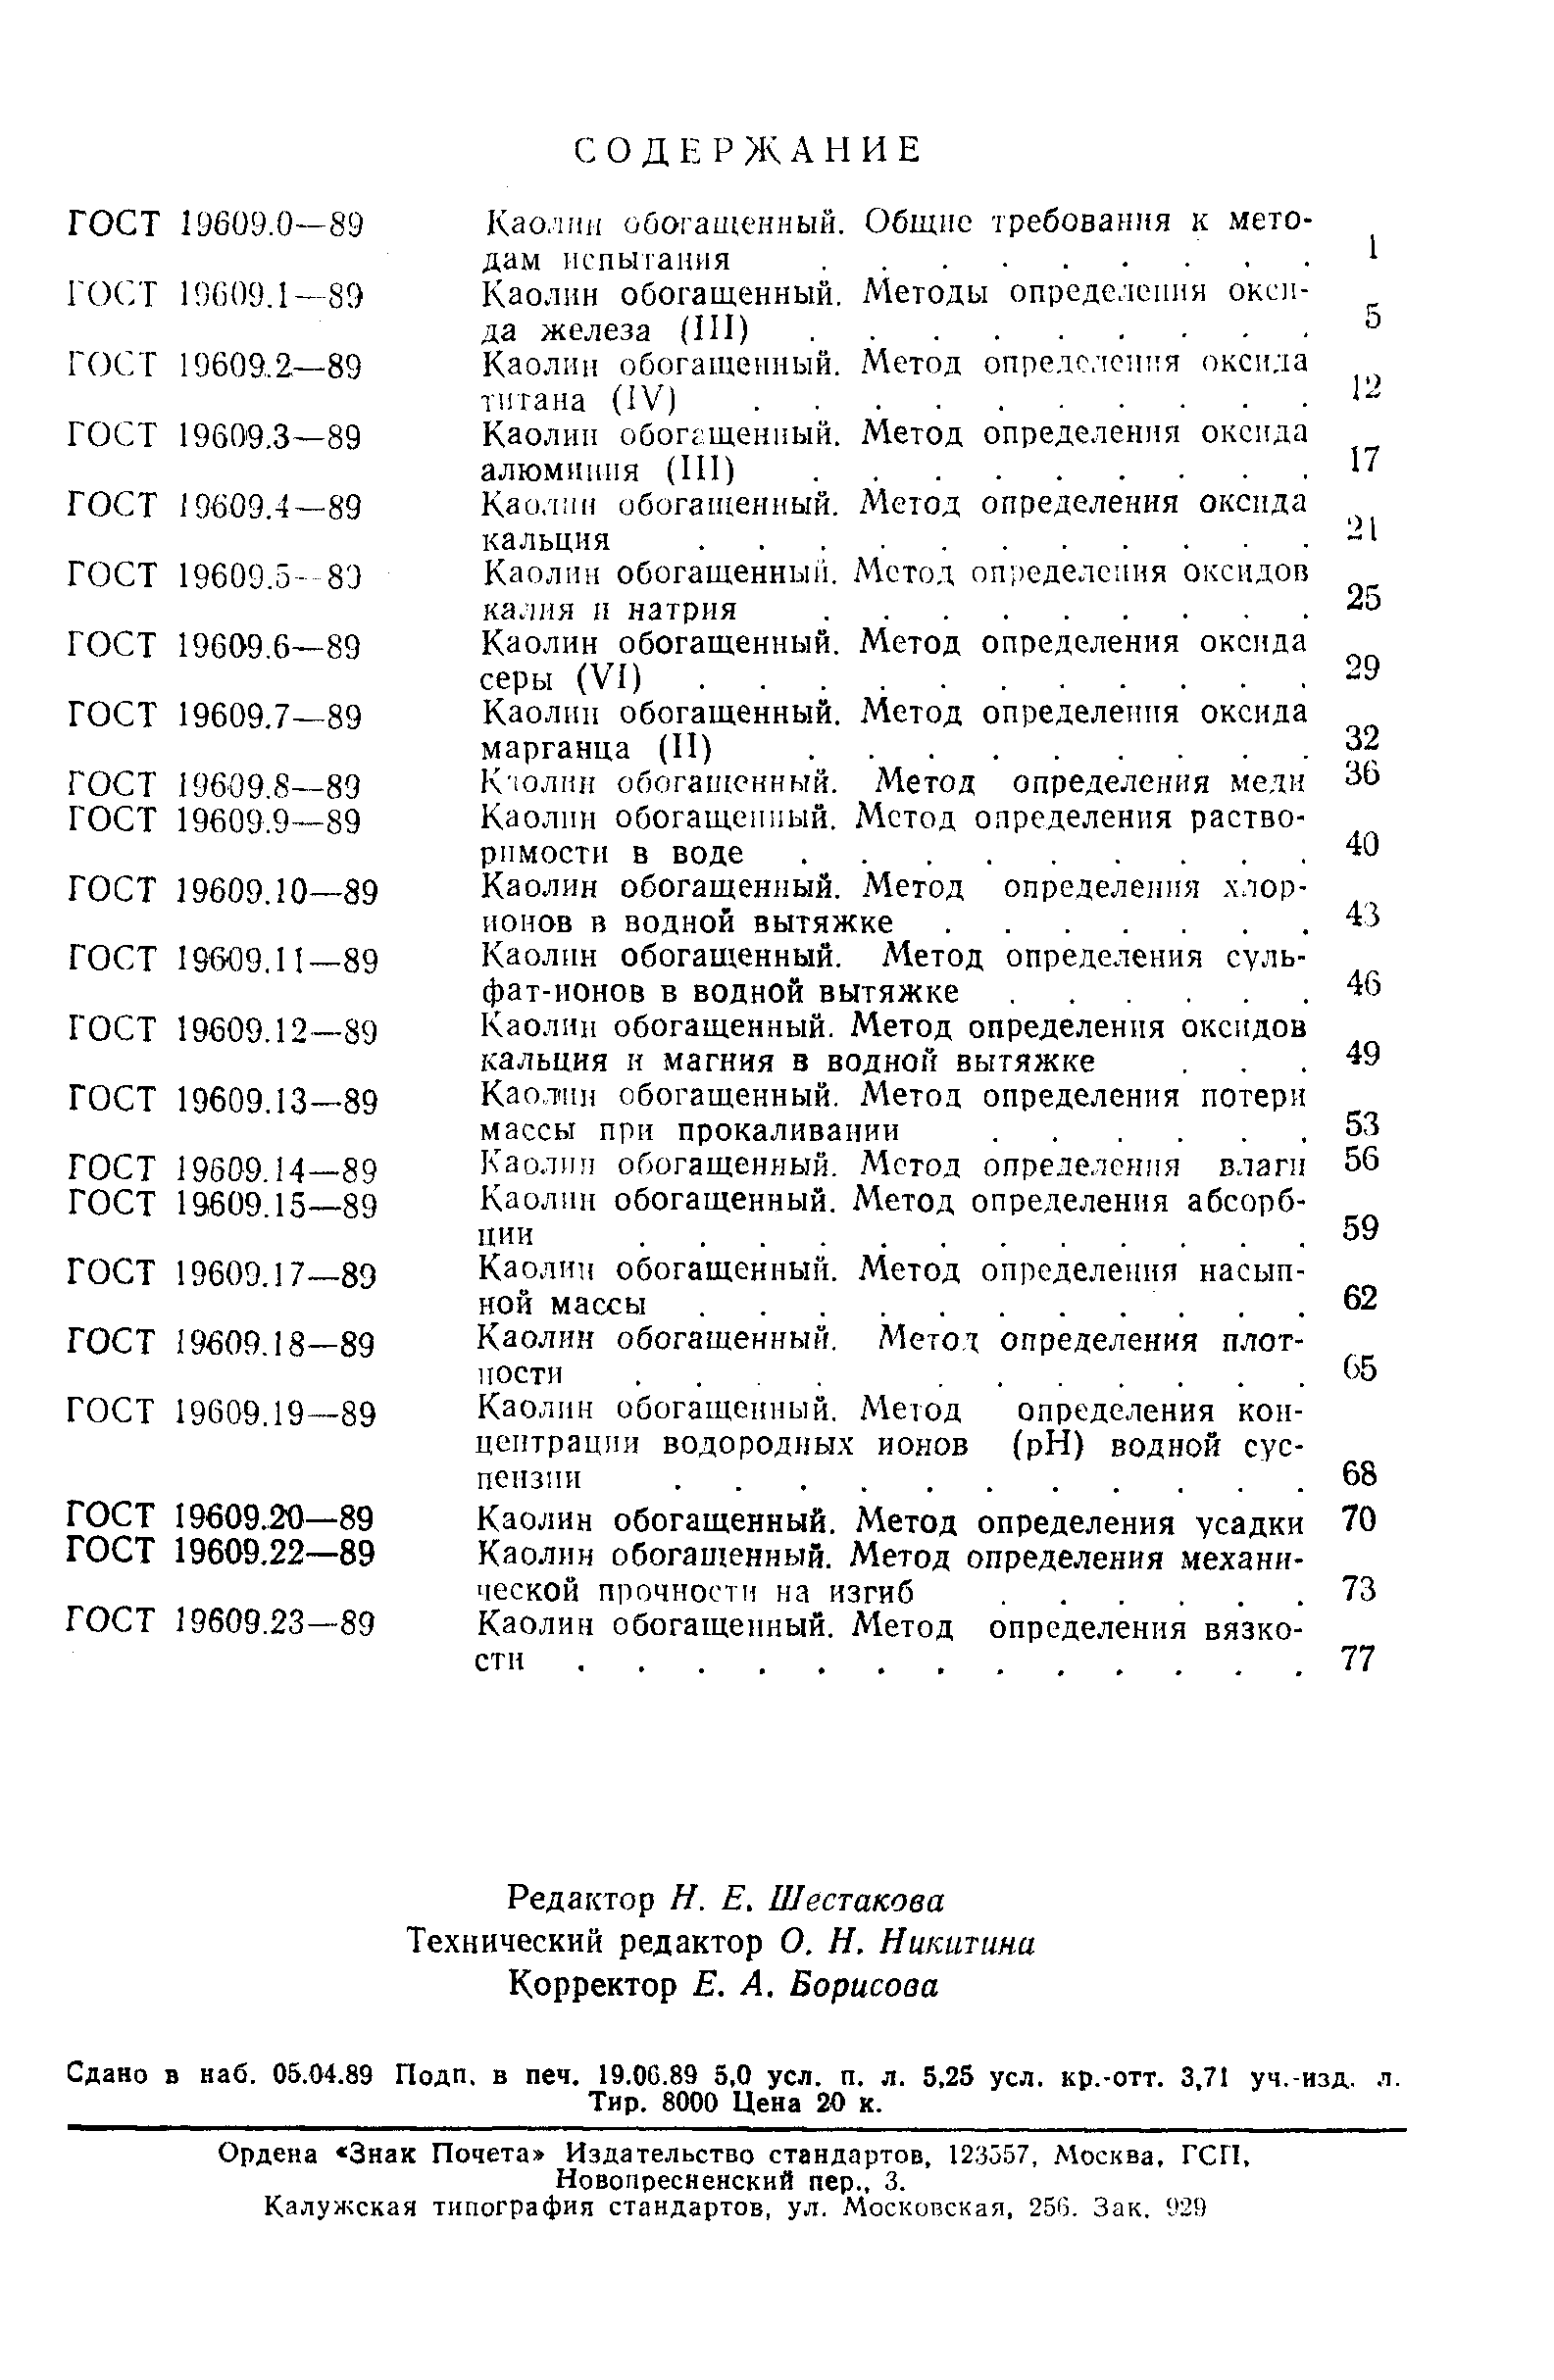 ГОСТ 19609.23-89